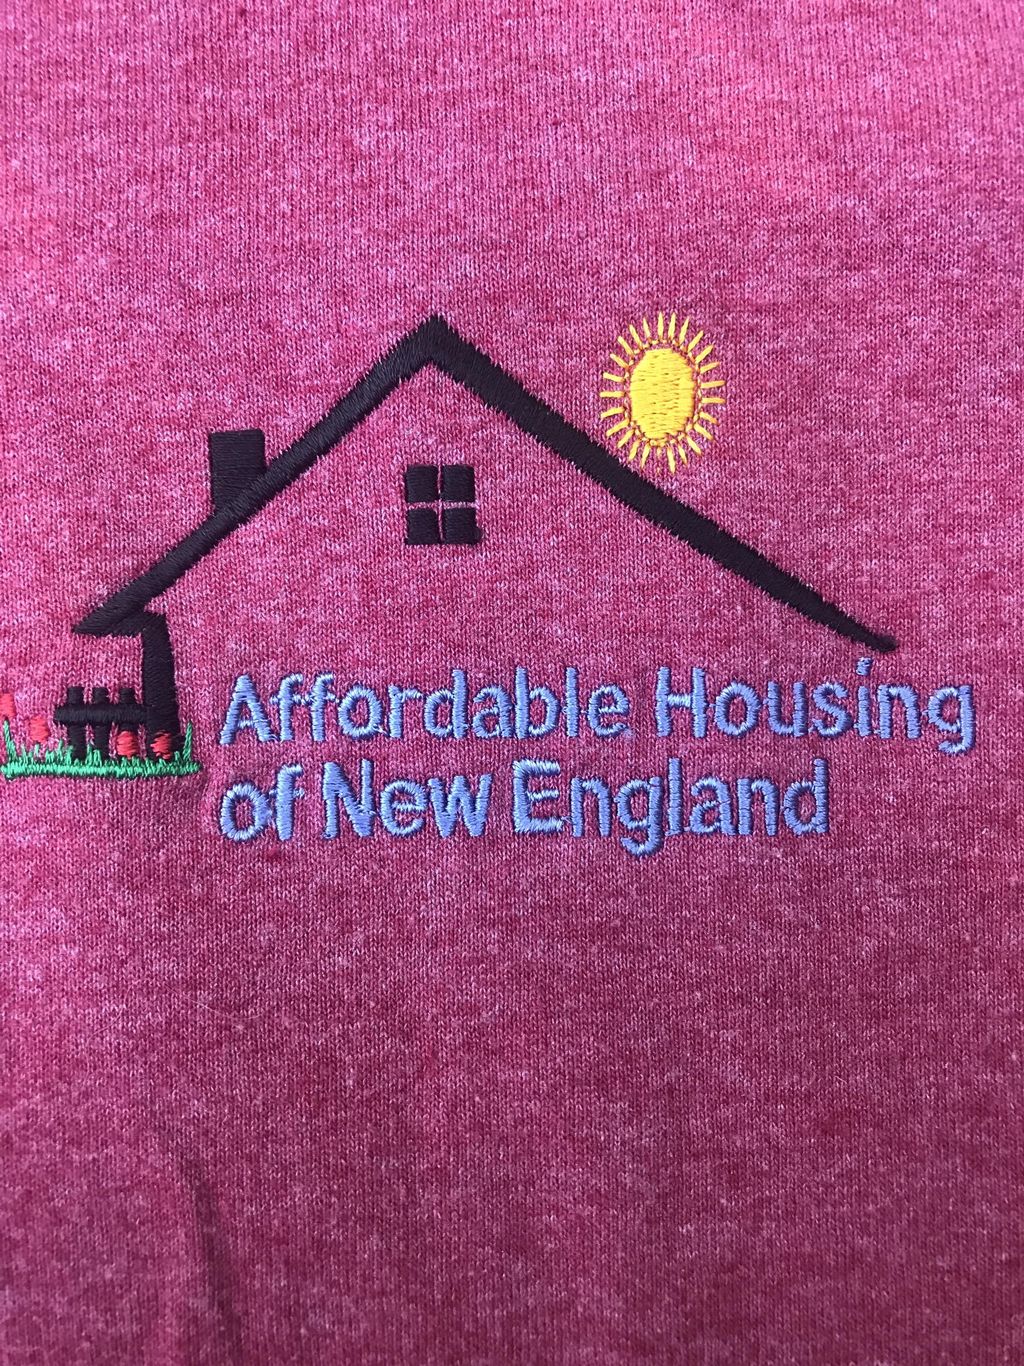 Affordable Housing of New England-handyman serv...